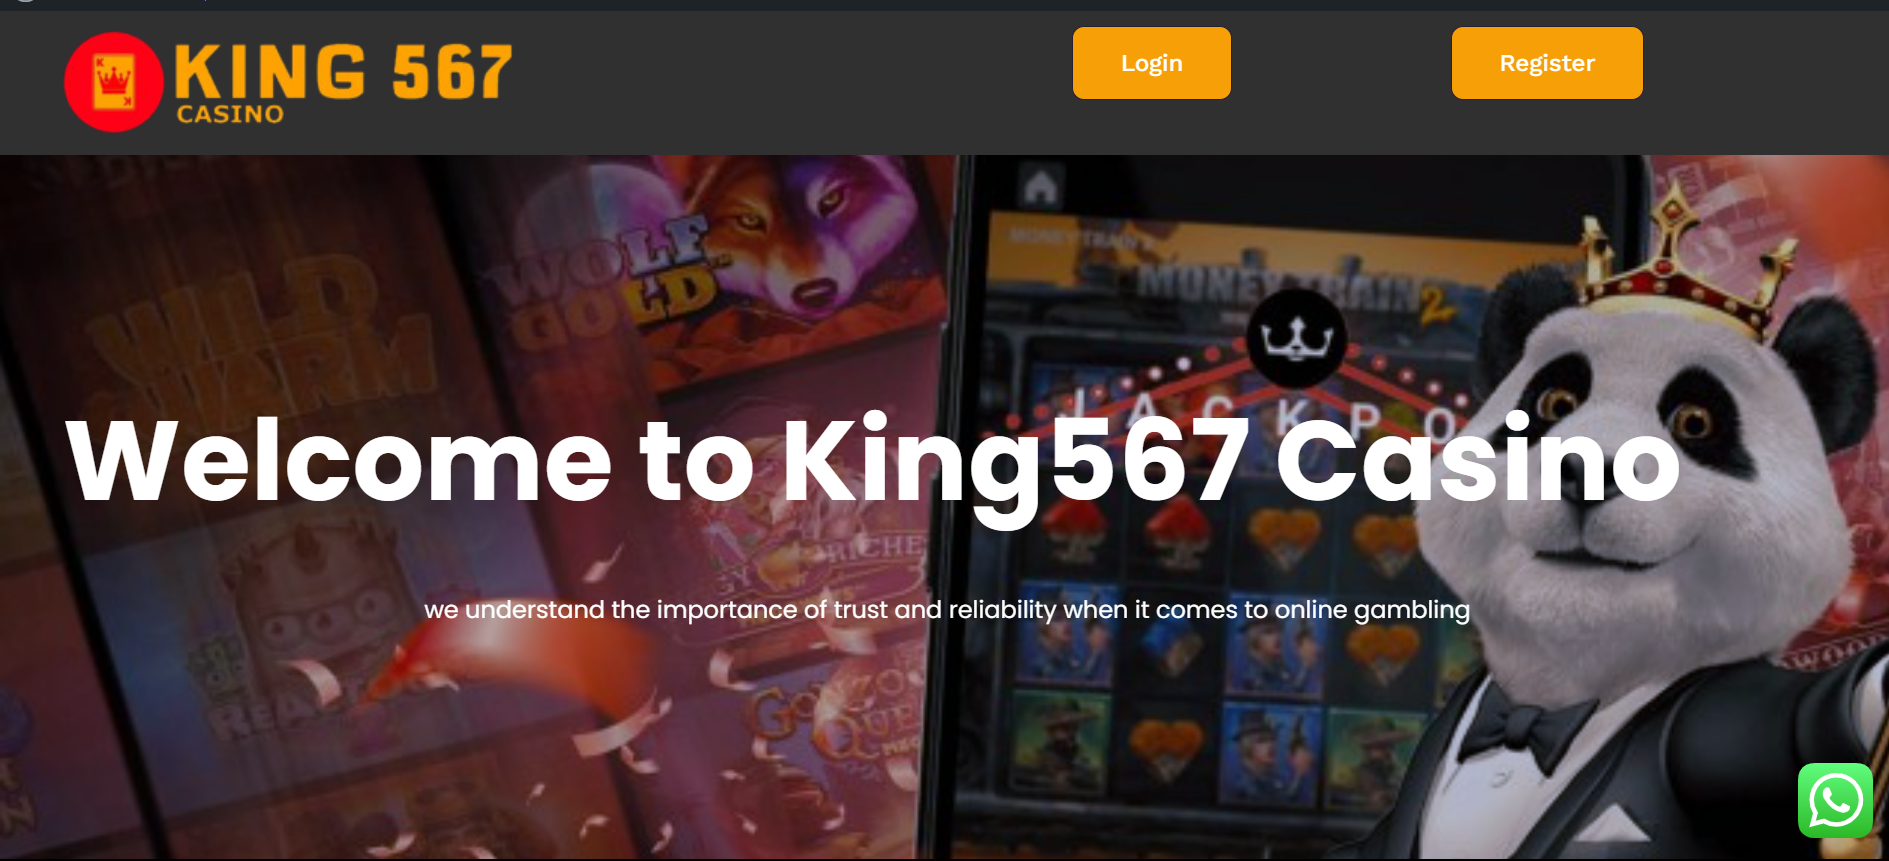 King567 registration process